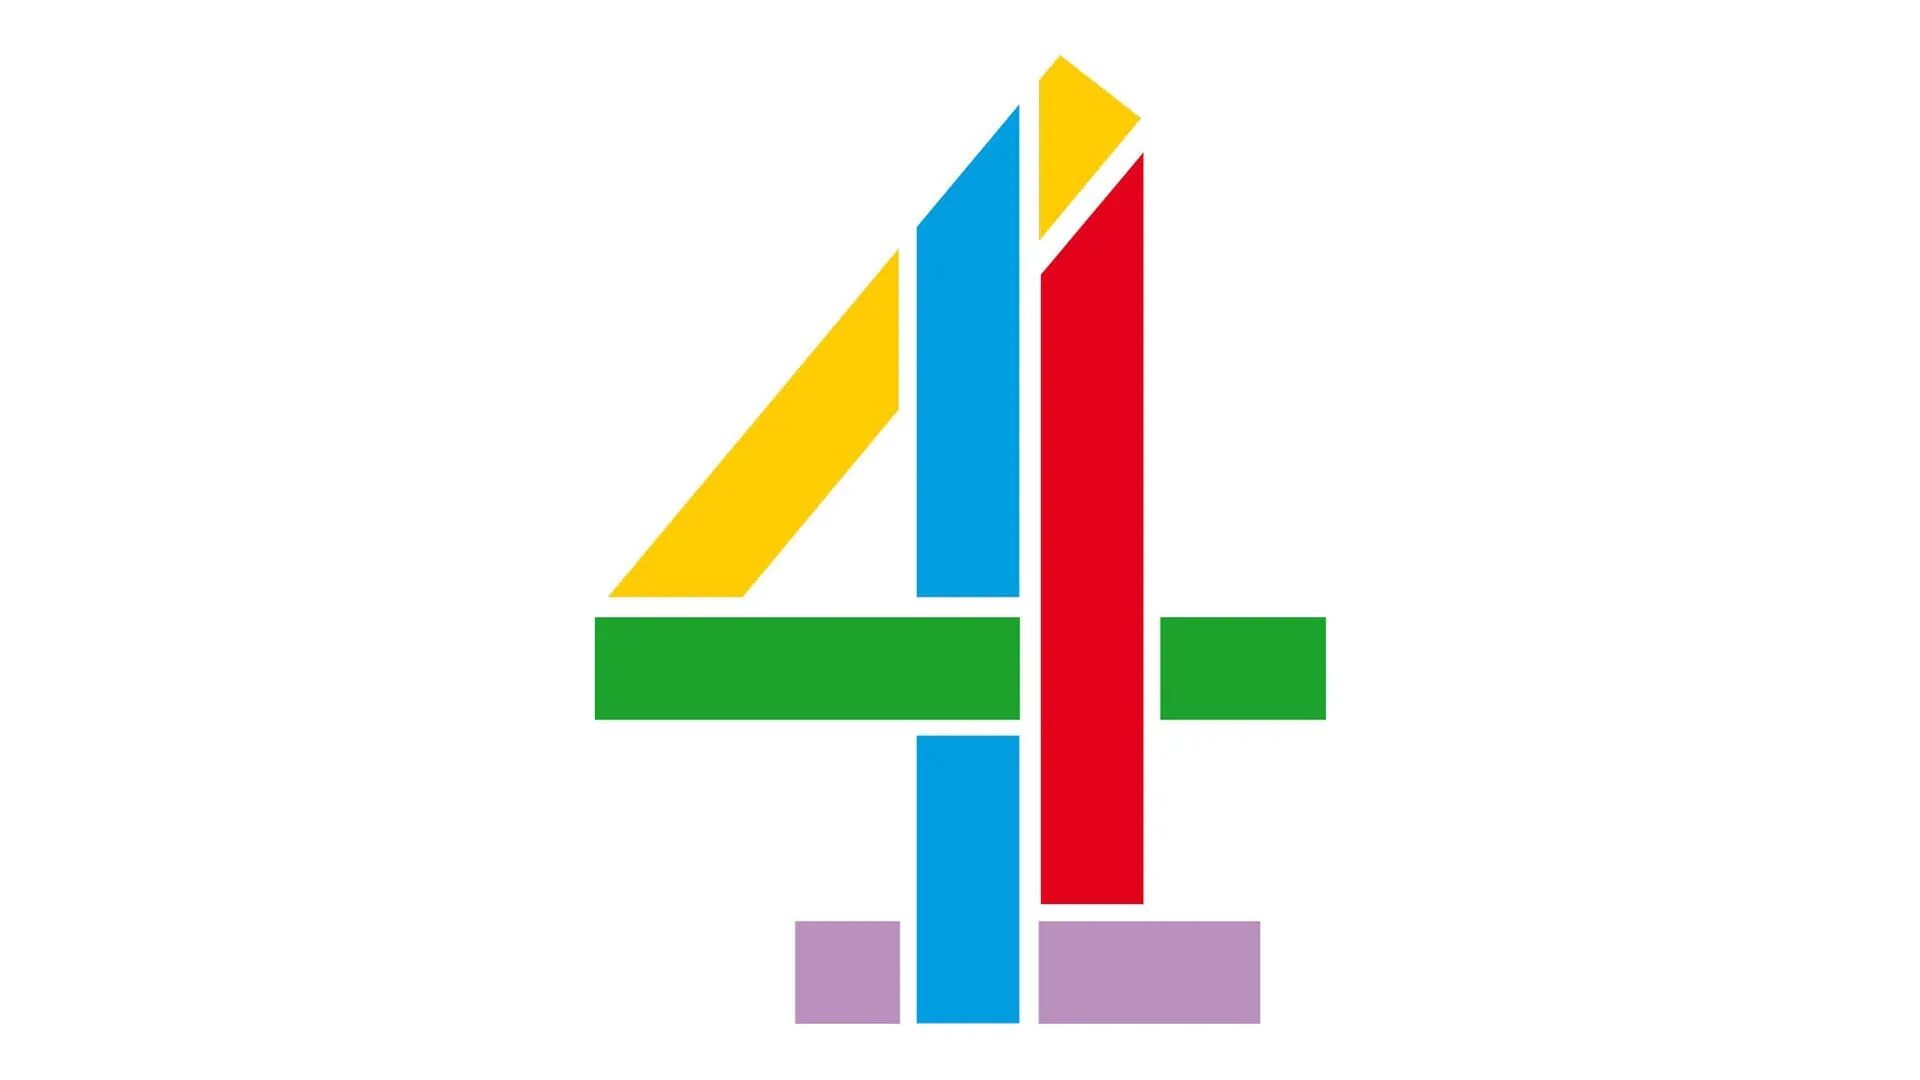 Channel britain. Channel 4. Channel 4 uk. Channel 4 logo. Channel 4 Britain.